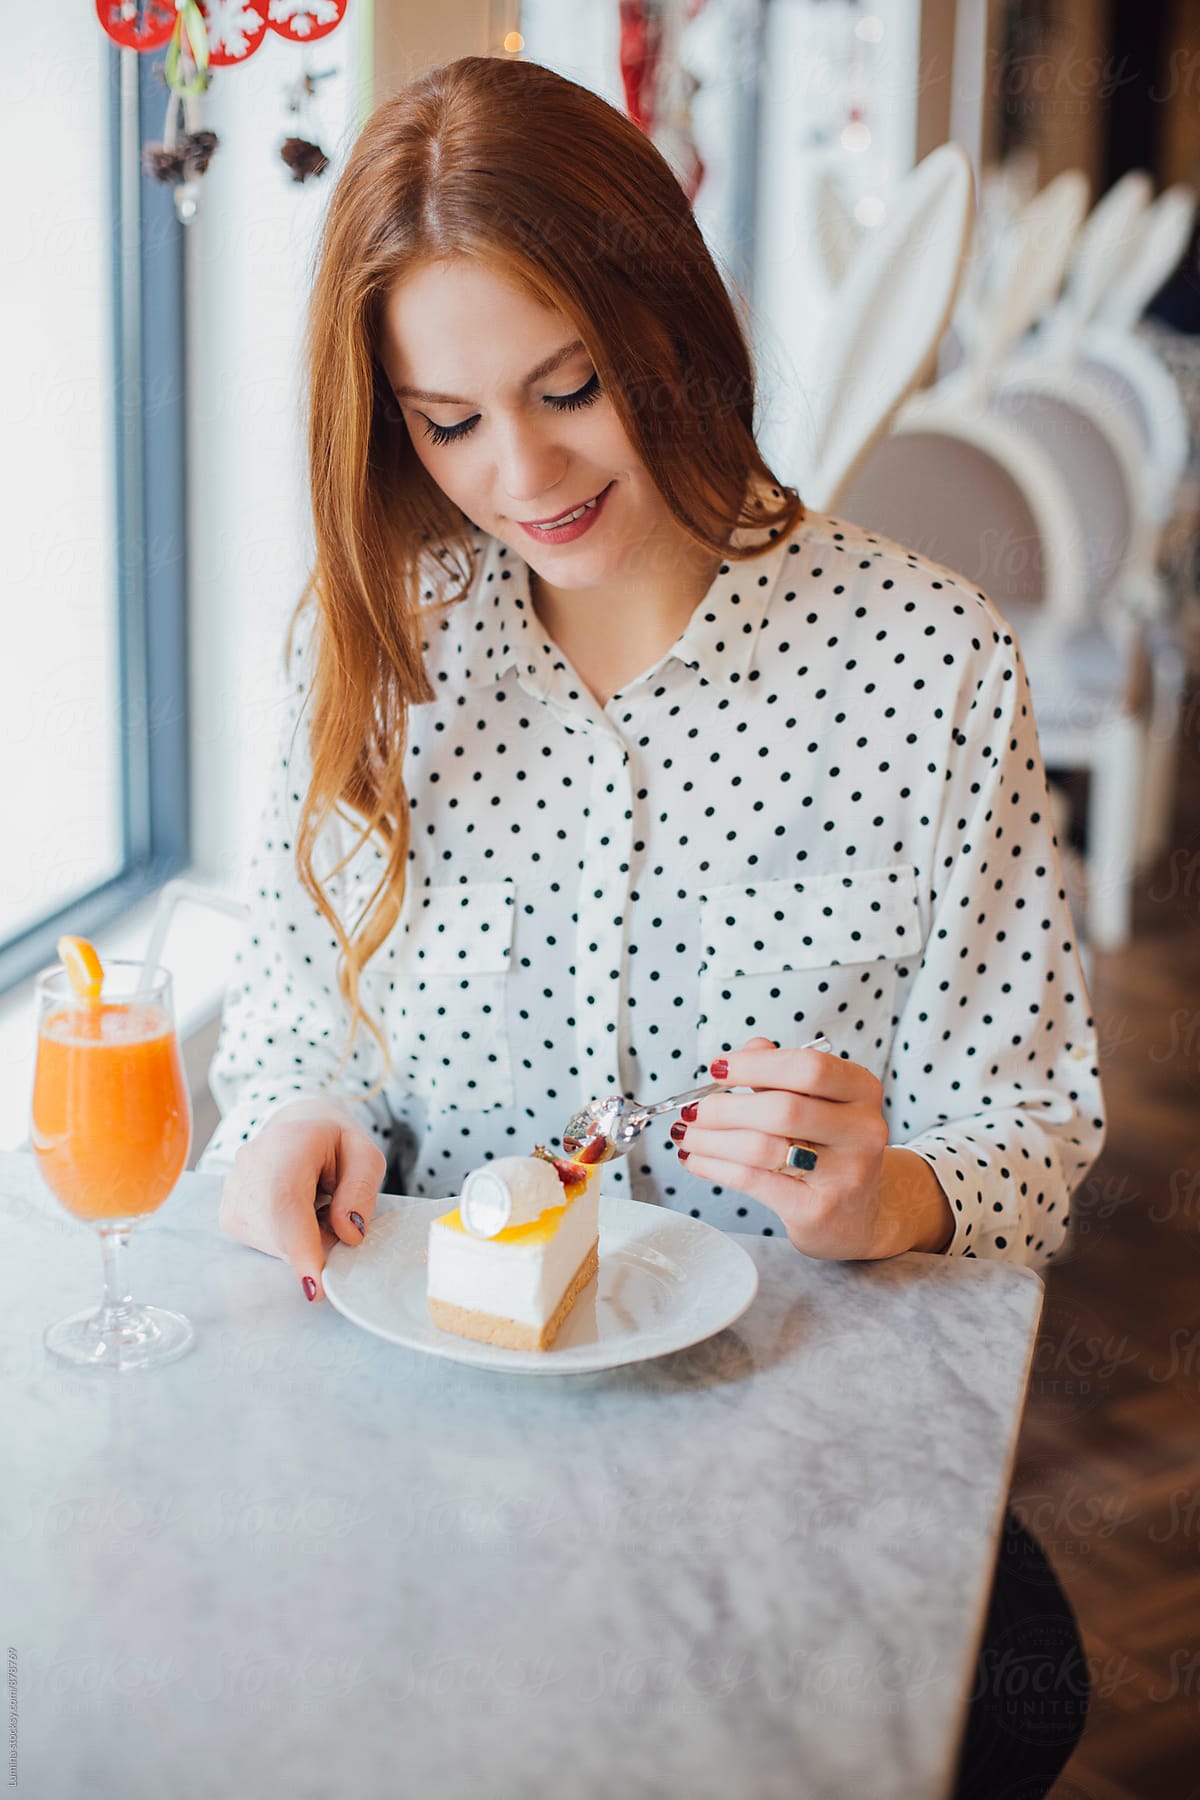 Woman Eating her Dessert and Drinking Orange Juice